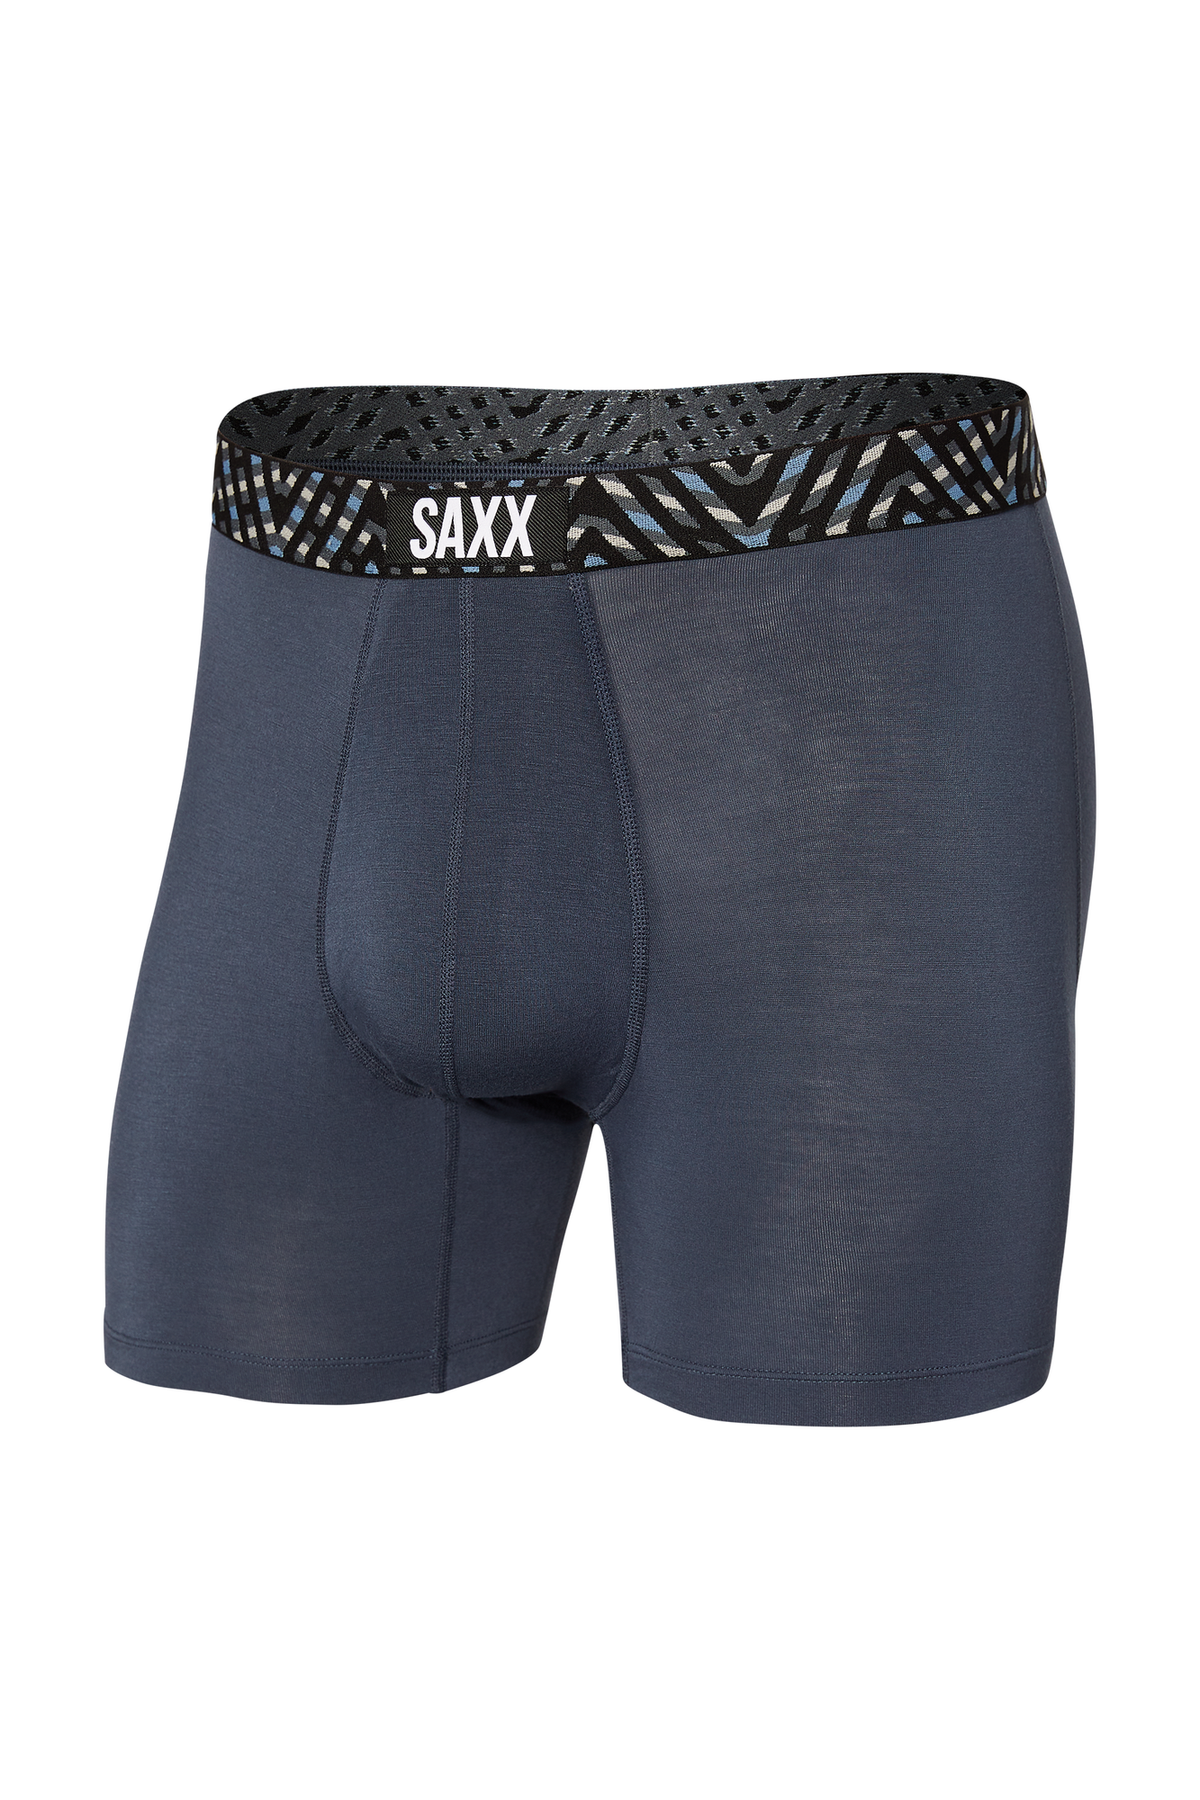 Saxx Vibe Super Soft Boxer Brief - SXBM35-IAZ, front 2